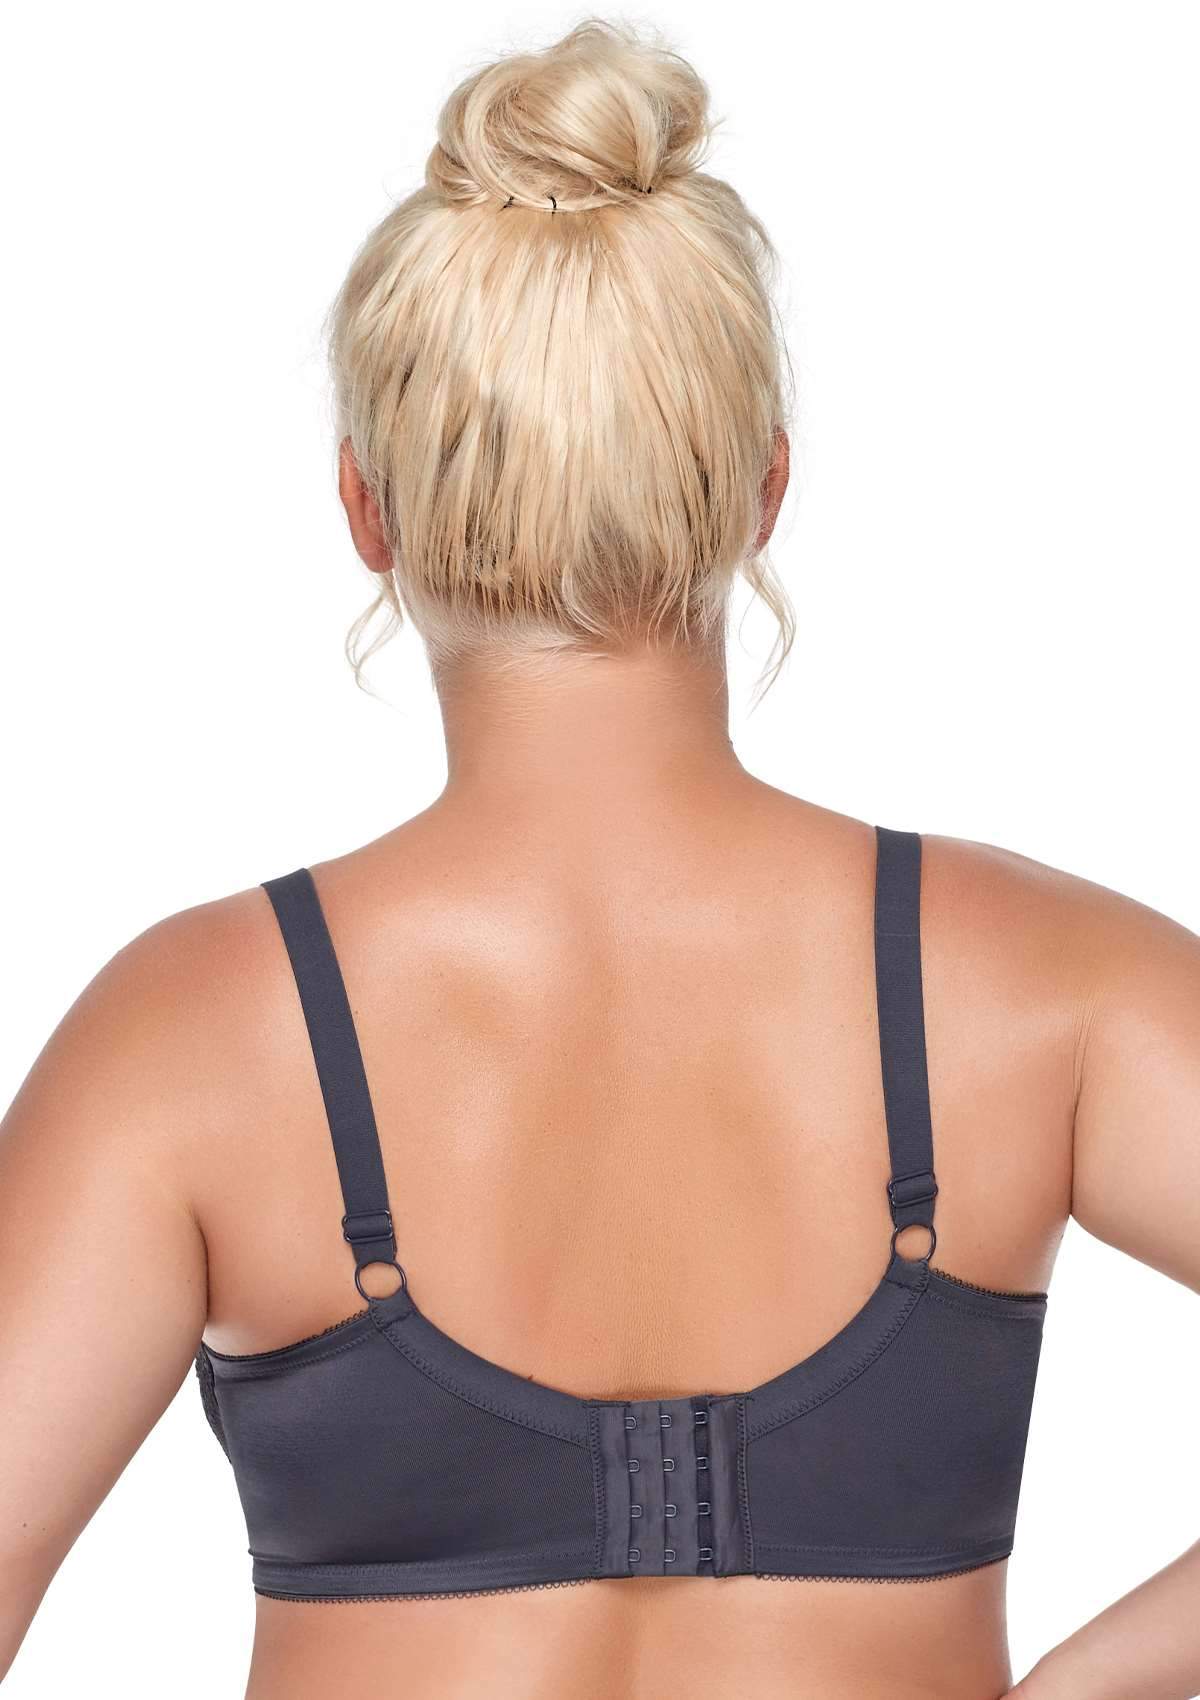 HSIA Enchante Matching Bra And Underwear Sets: Uplift Big Boobs Bra - Dark Gray / 44 / D